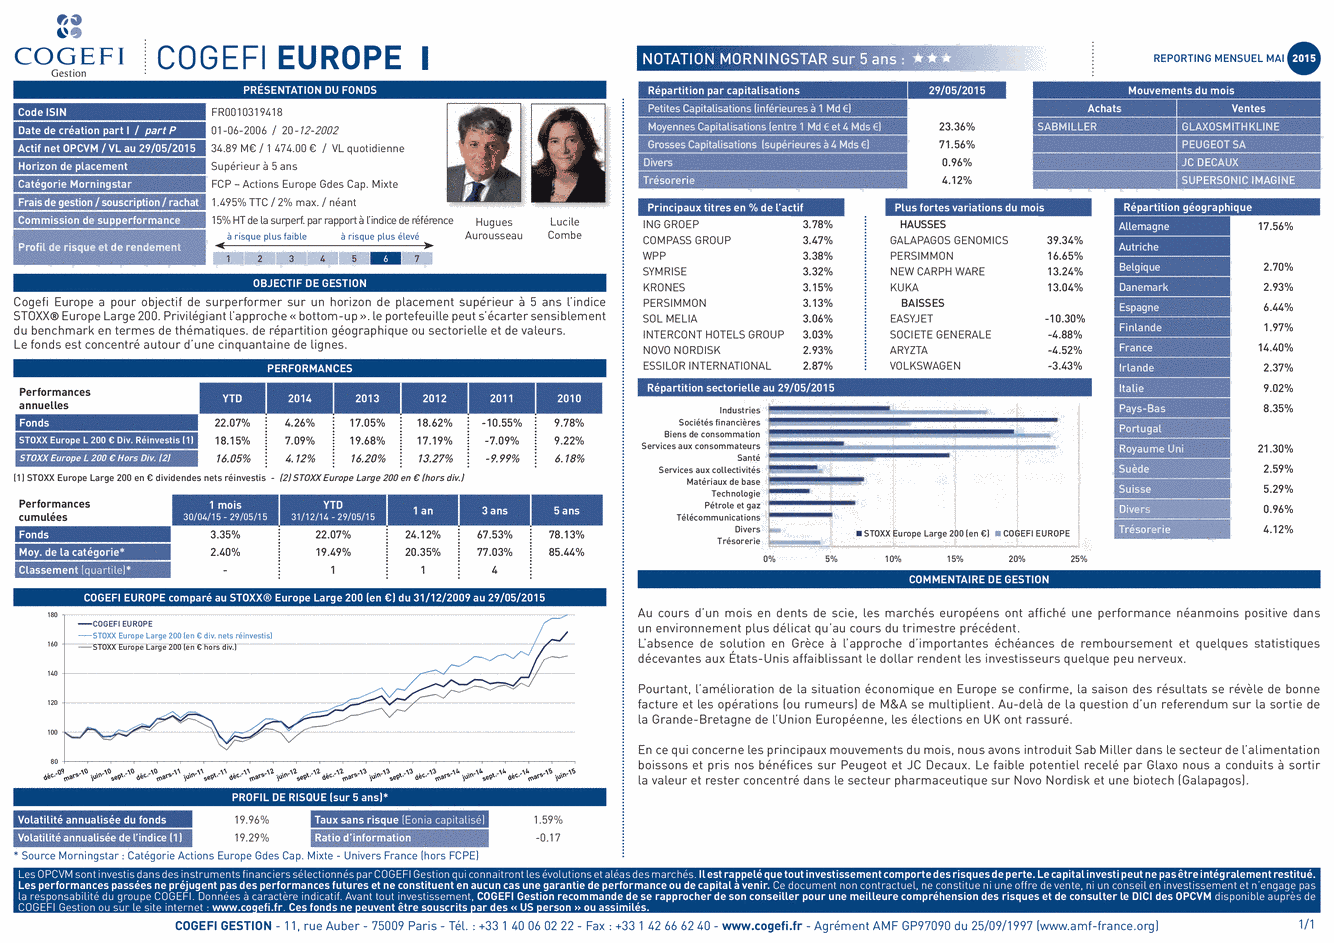 Fiche Produit Cogefi Europe I - 31/05/2015 - French